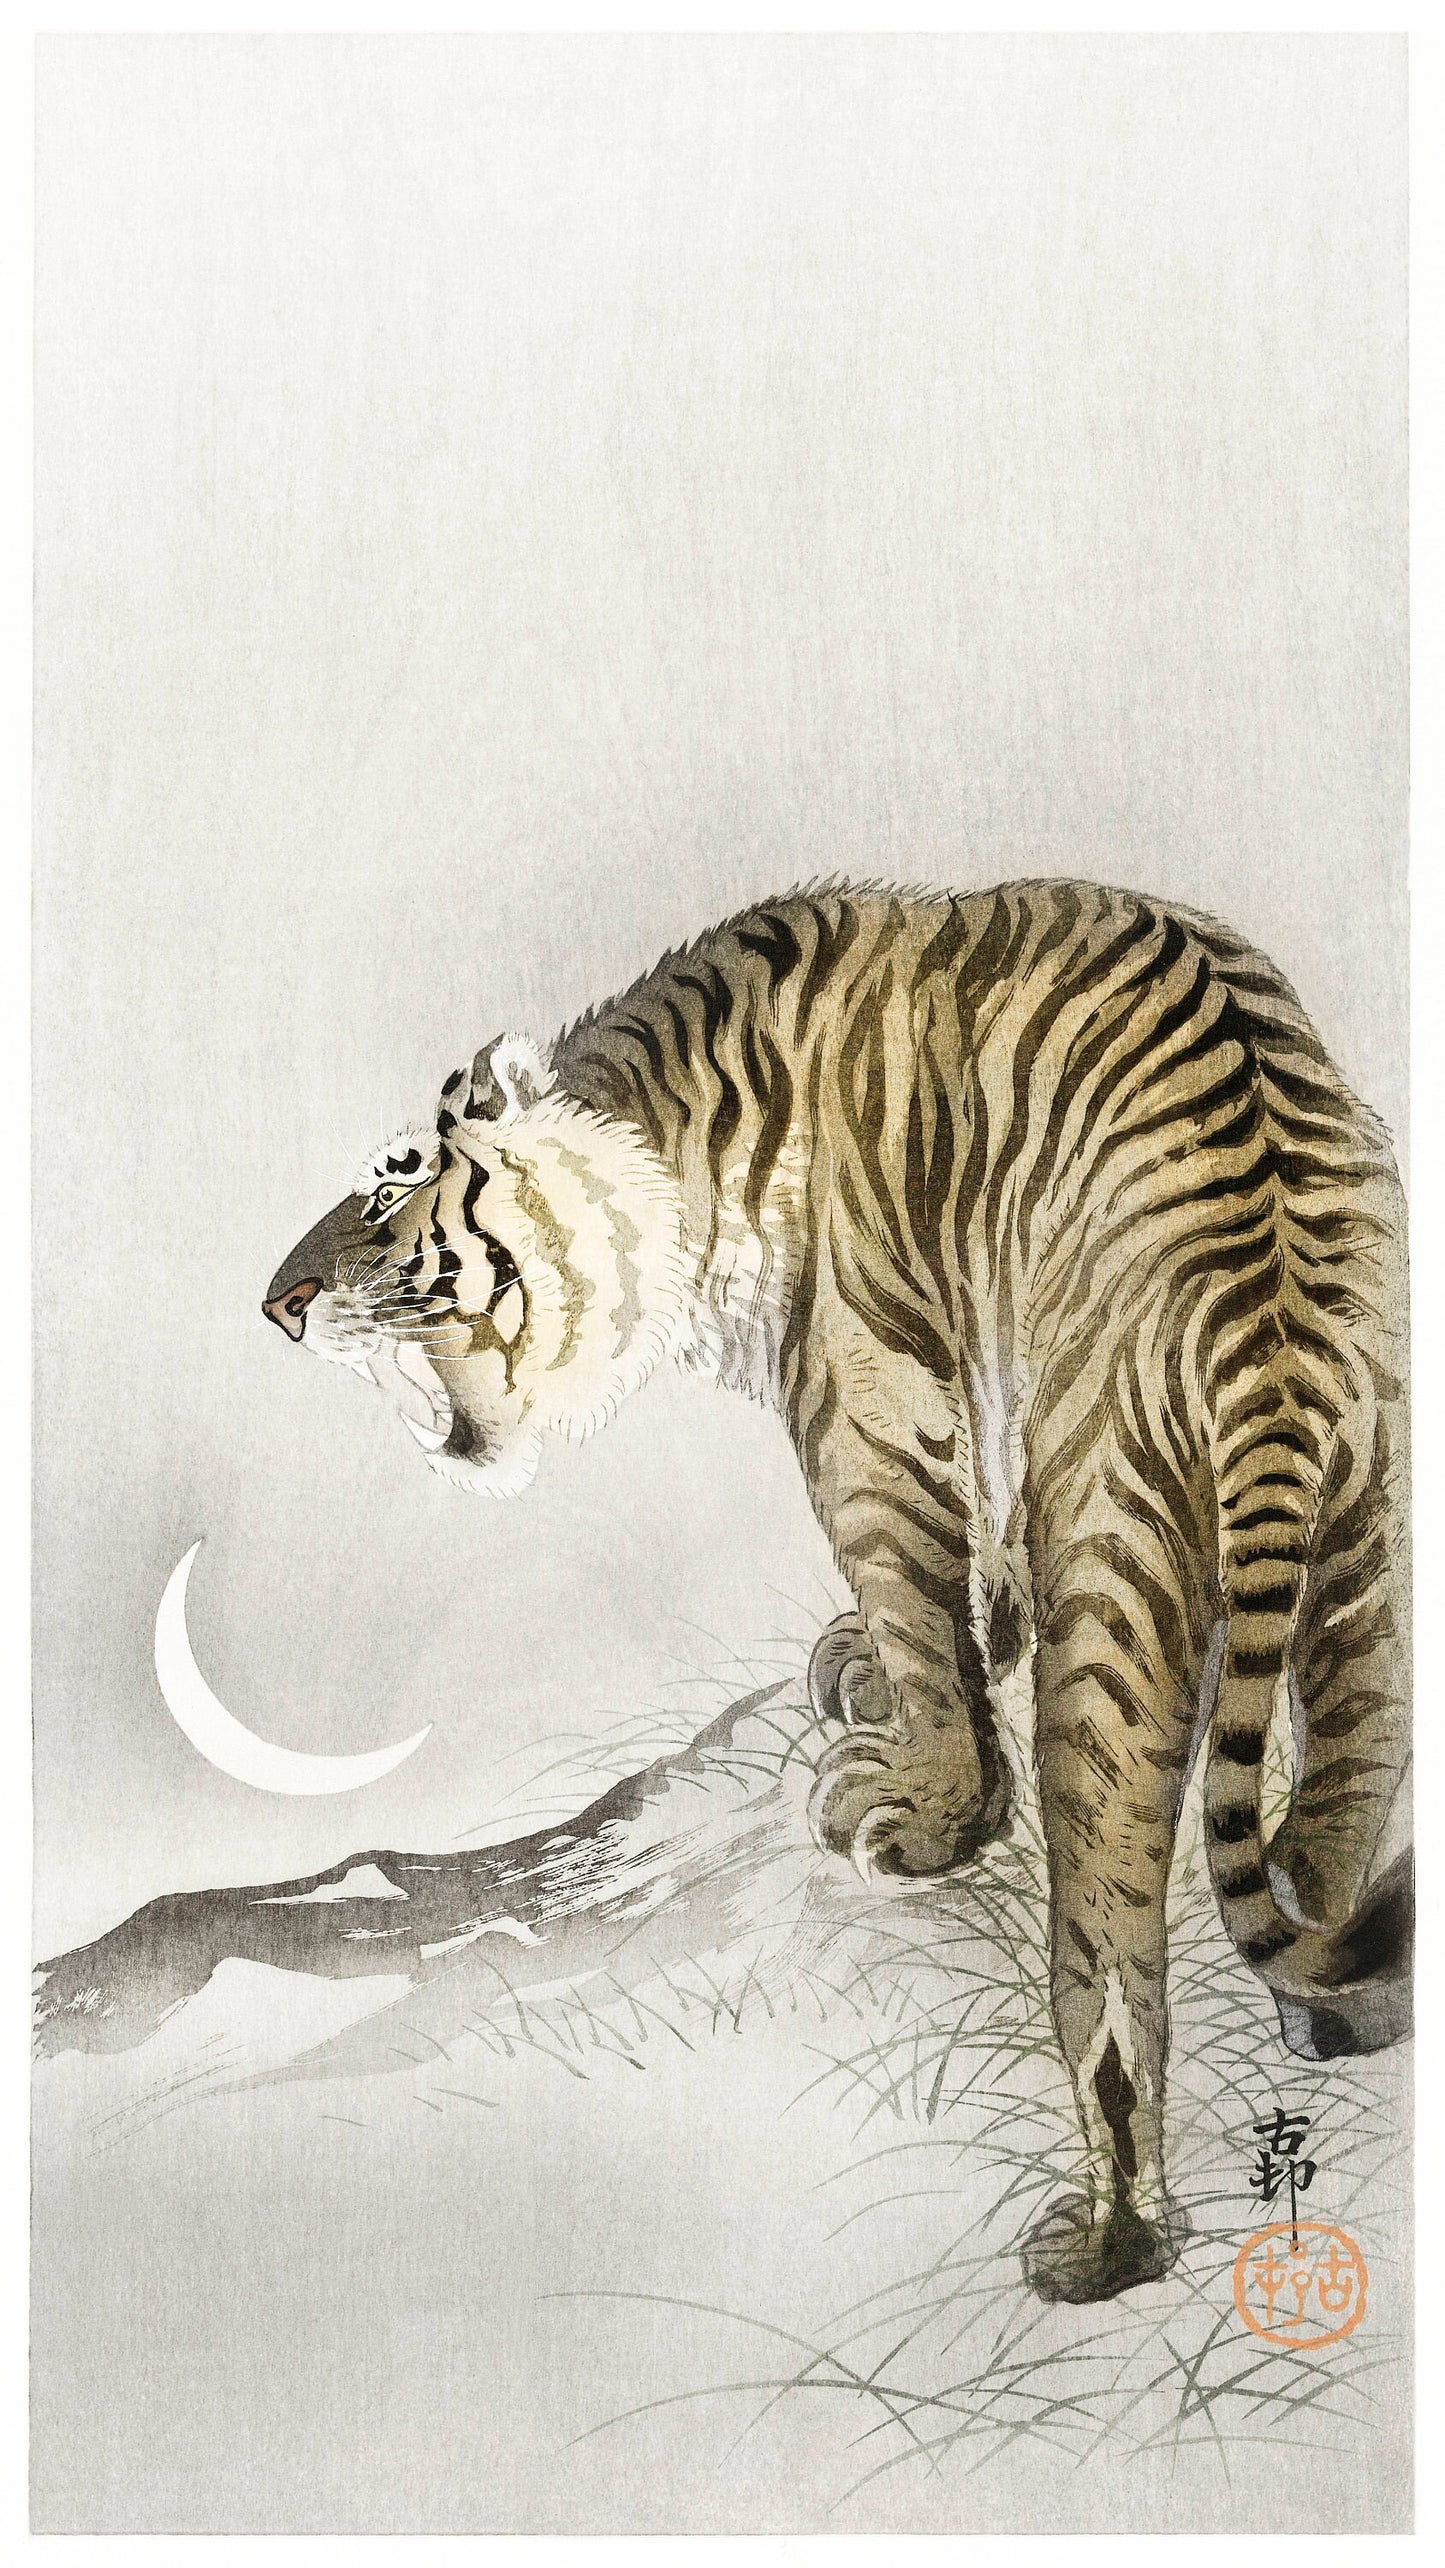 Roaring tiger by Ohara Koson Japanese Art Print Poster Wall Hanging Decor A4 A3 A2